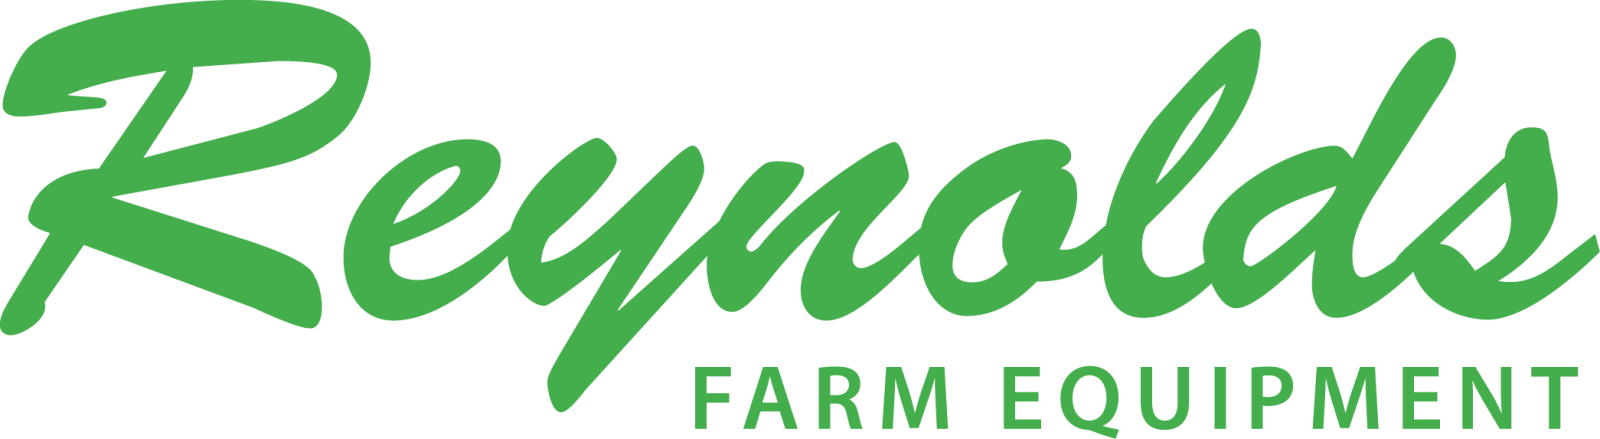 Reynolds Farm Equipment Company Logo